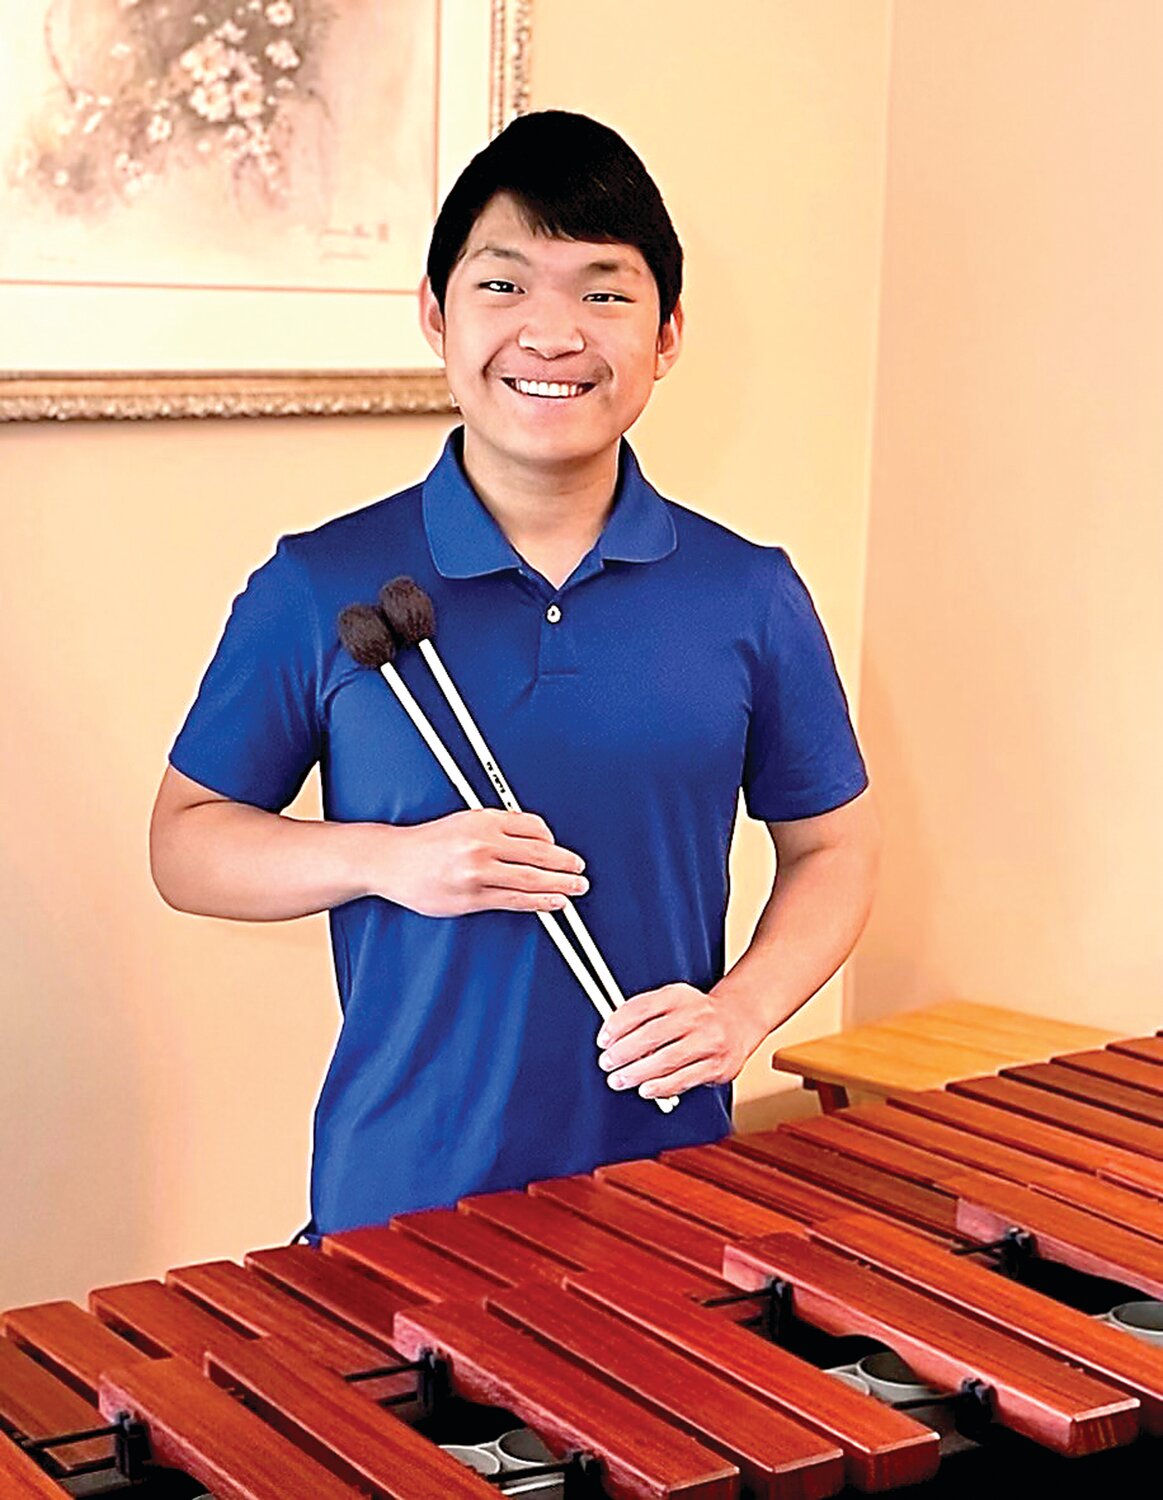 Mark Hintenlang Memorial Scholarship Award winner Will Thompson poses with his marimba.